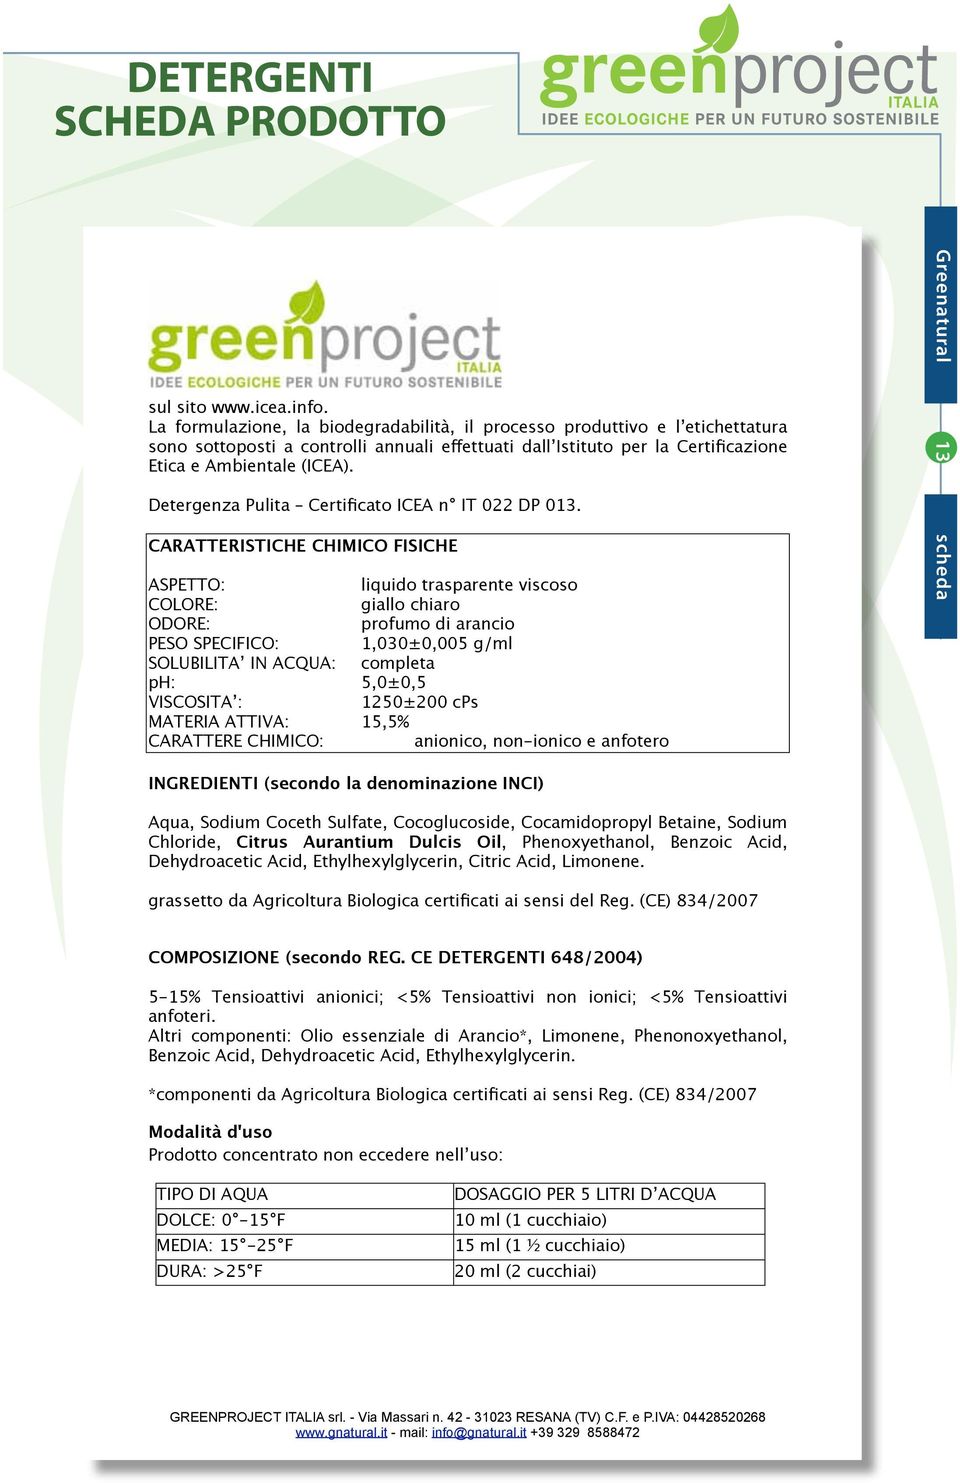 Detergenza Pulita Certificato ICEA n IT 022 DP 013.